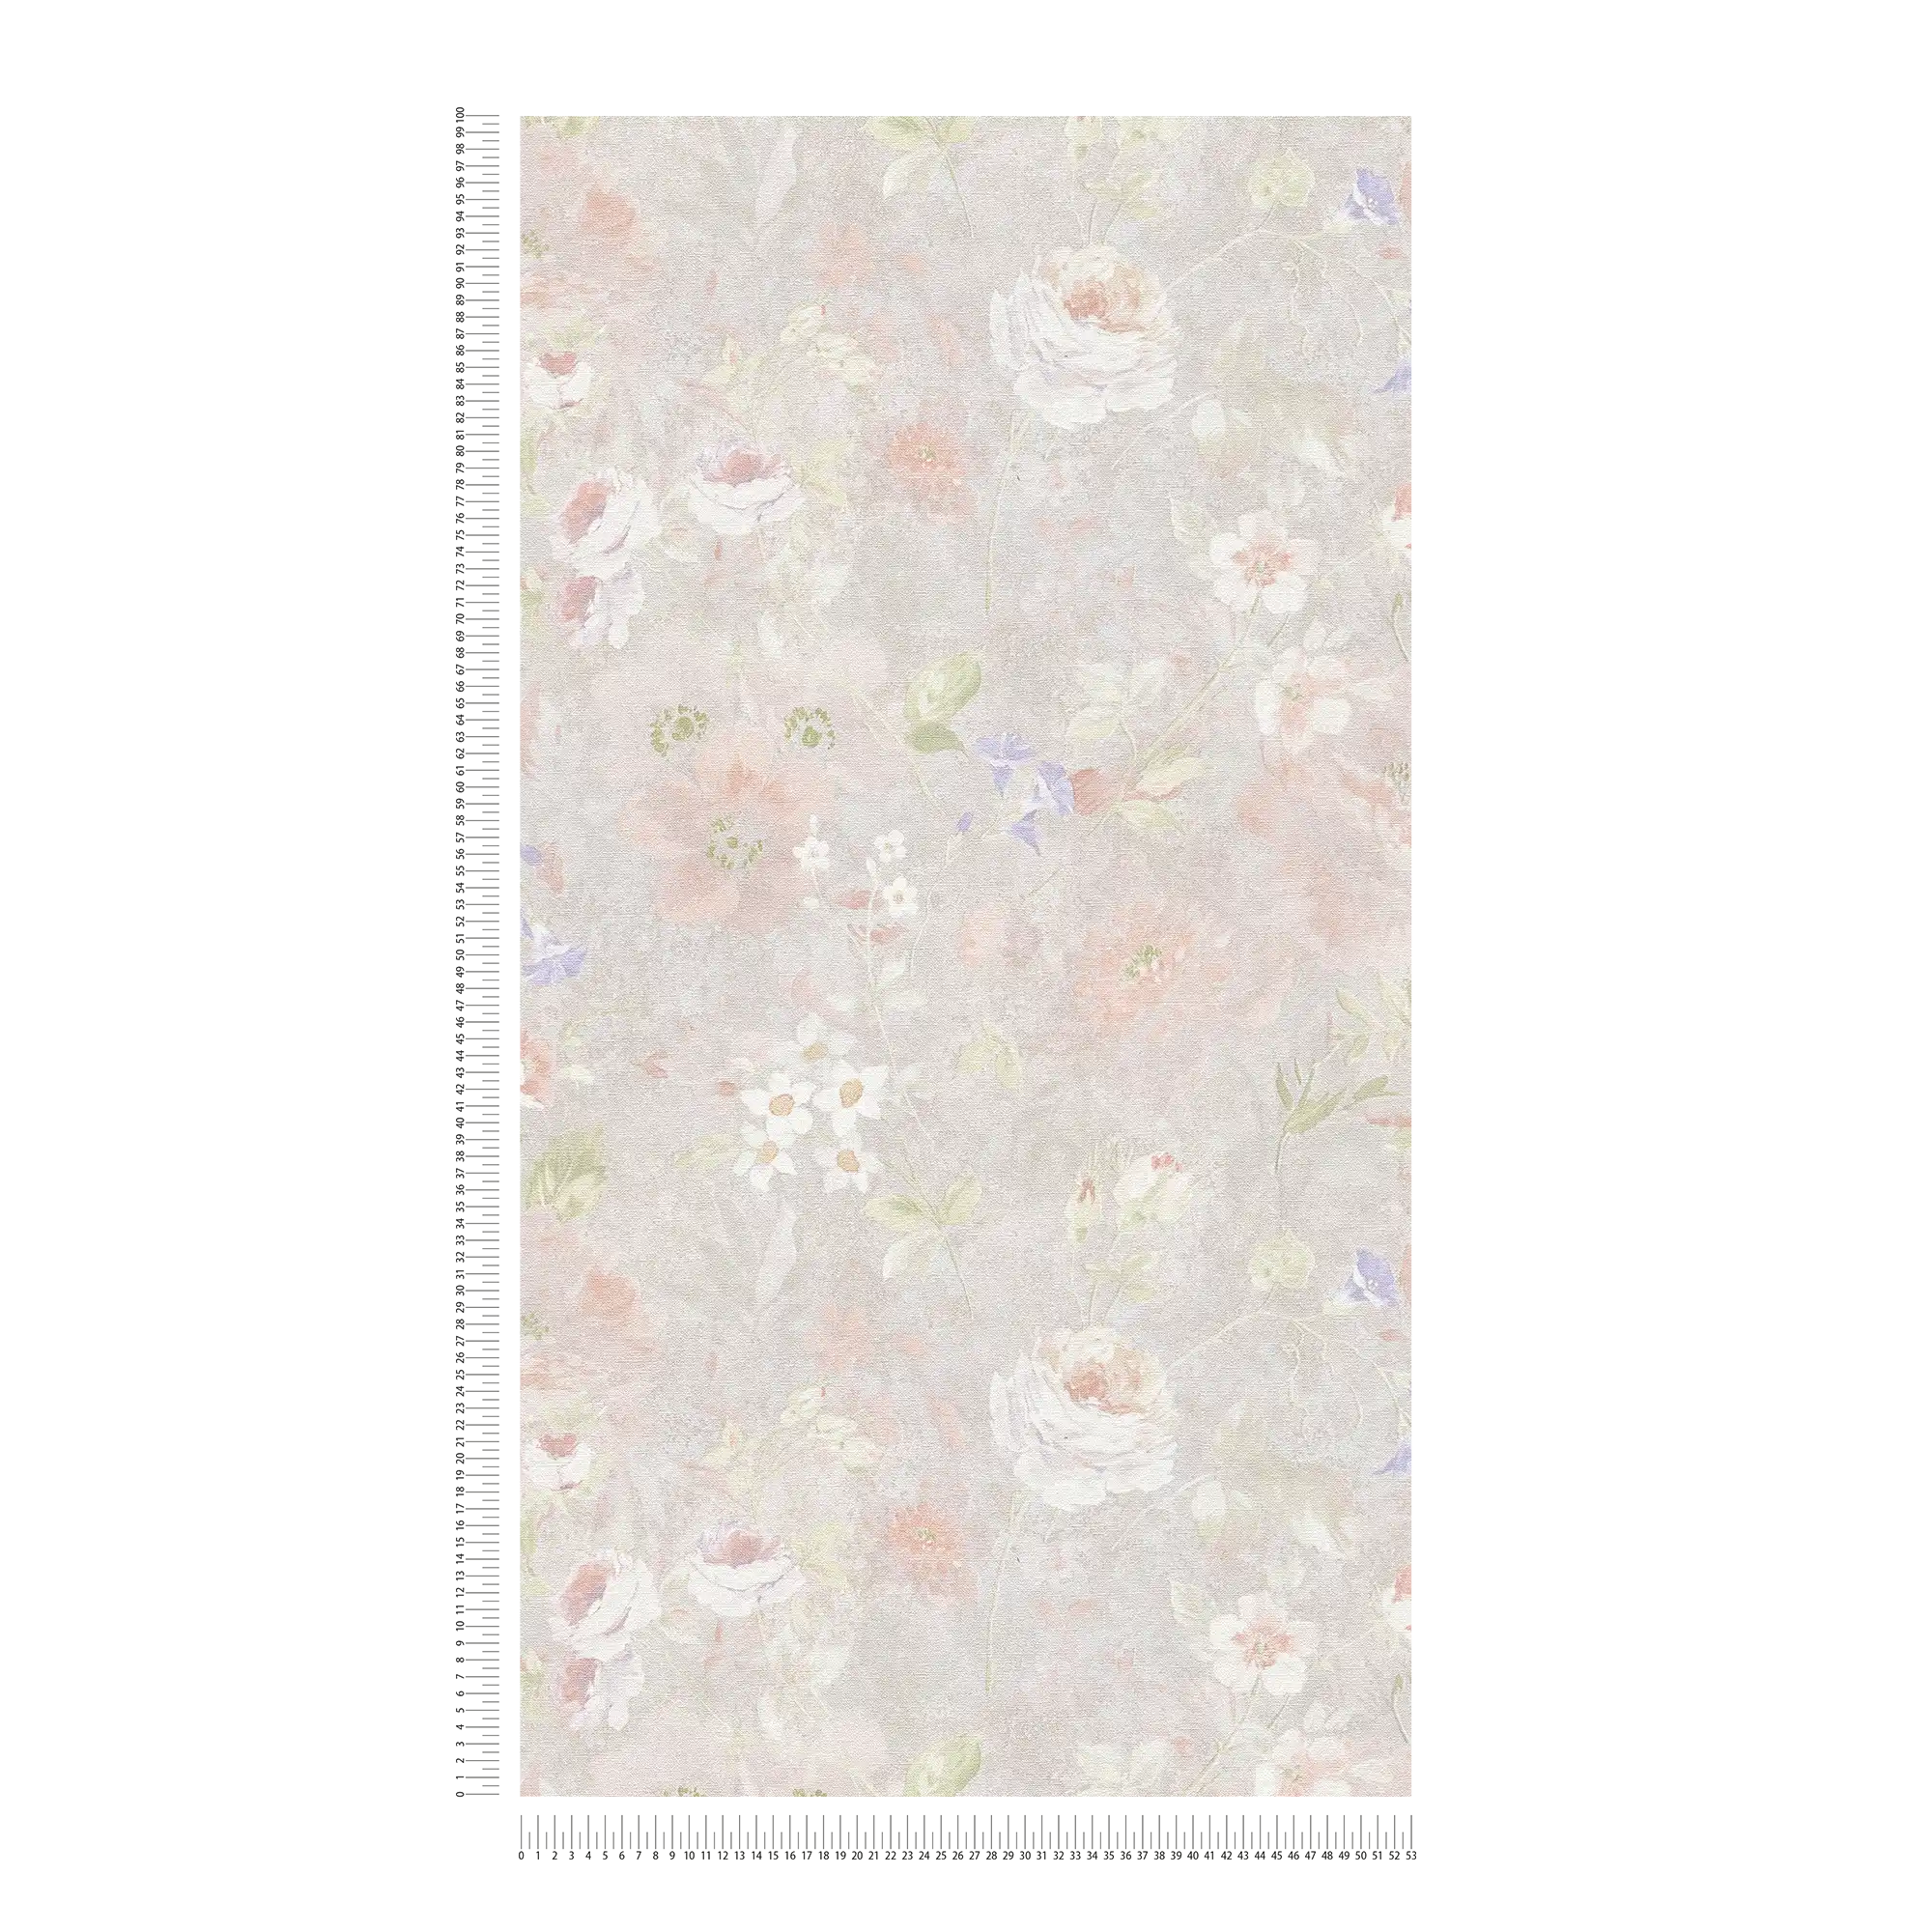             Blumentapete gemaltes Muster PVC-frei – Grau, Bunt, Rosa
        